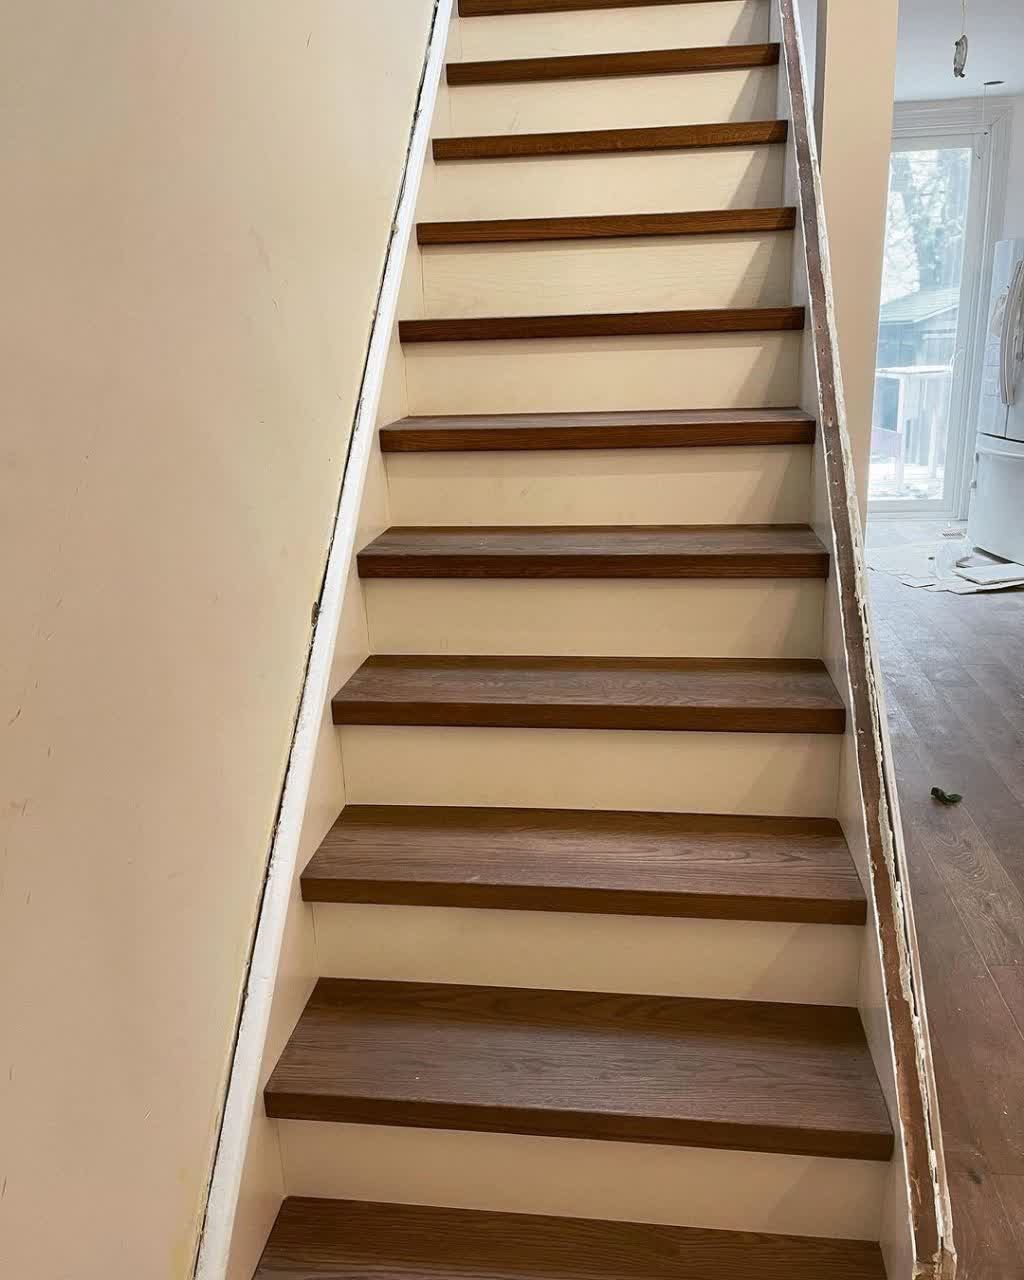 Repair and replacement of stair flooring